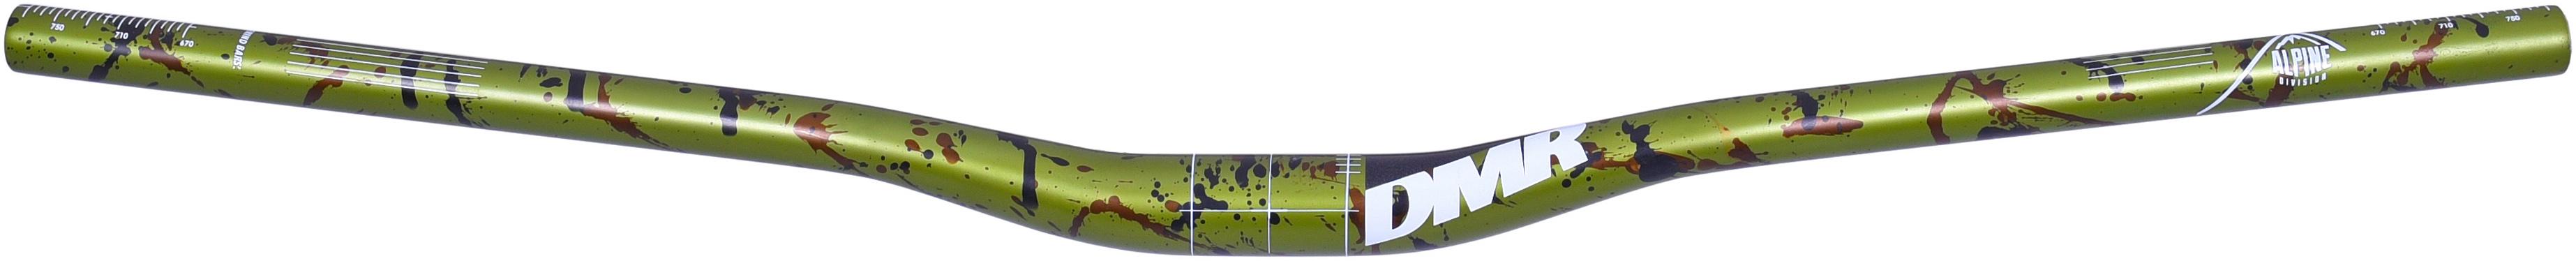 Dmr Wingbar Limited Edition Handlebar - Liquid Camo Green